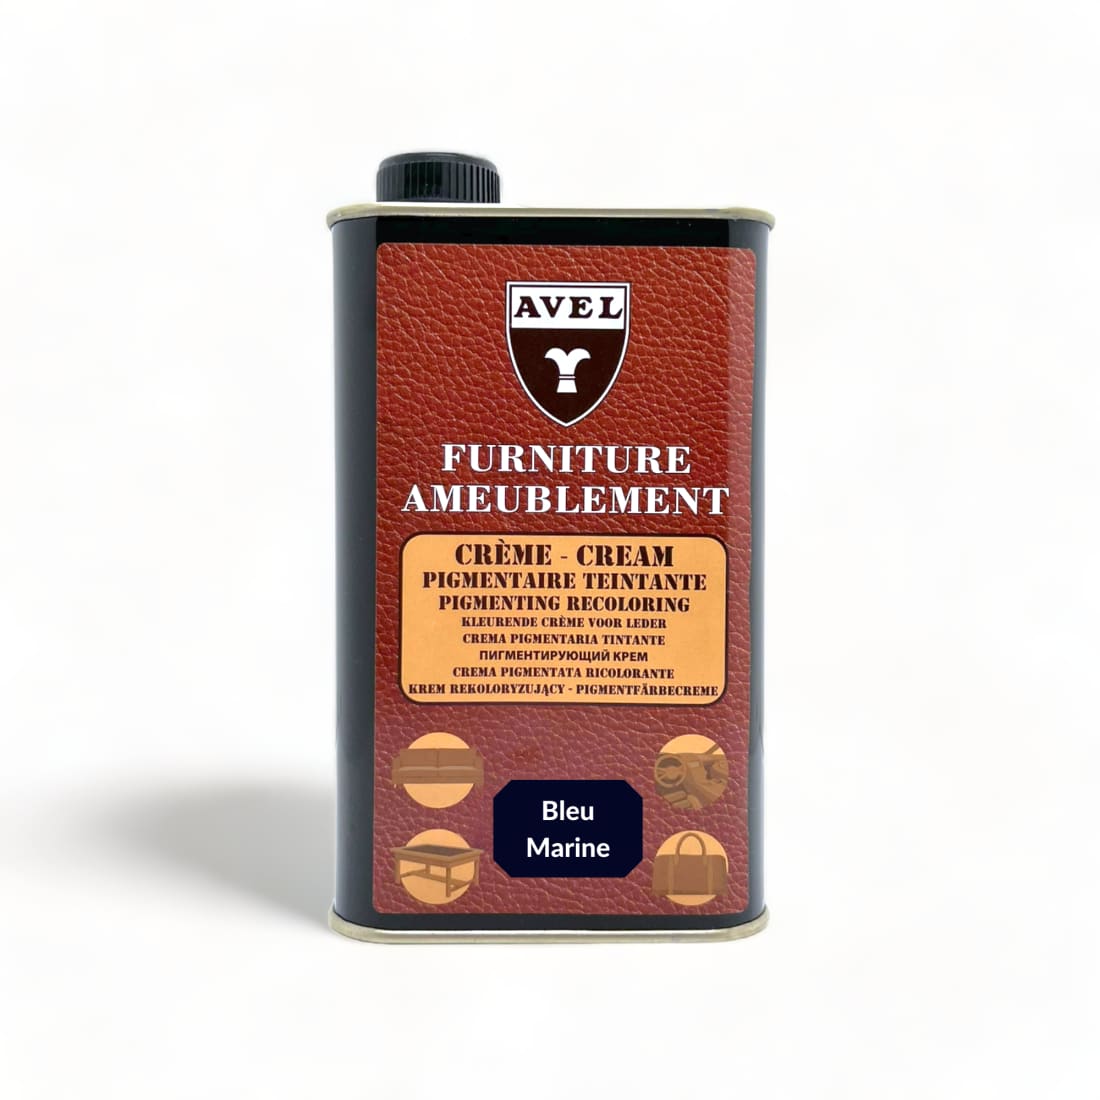 Crème Pigmentaire Teintante Bleu Marine - Avel - 375 ml -